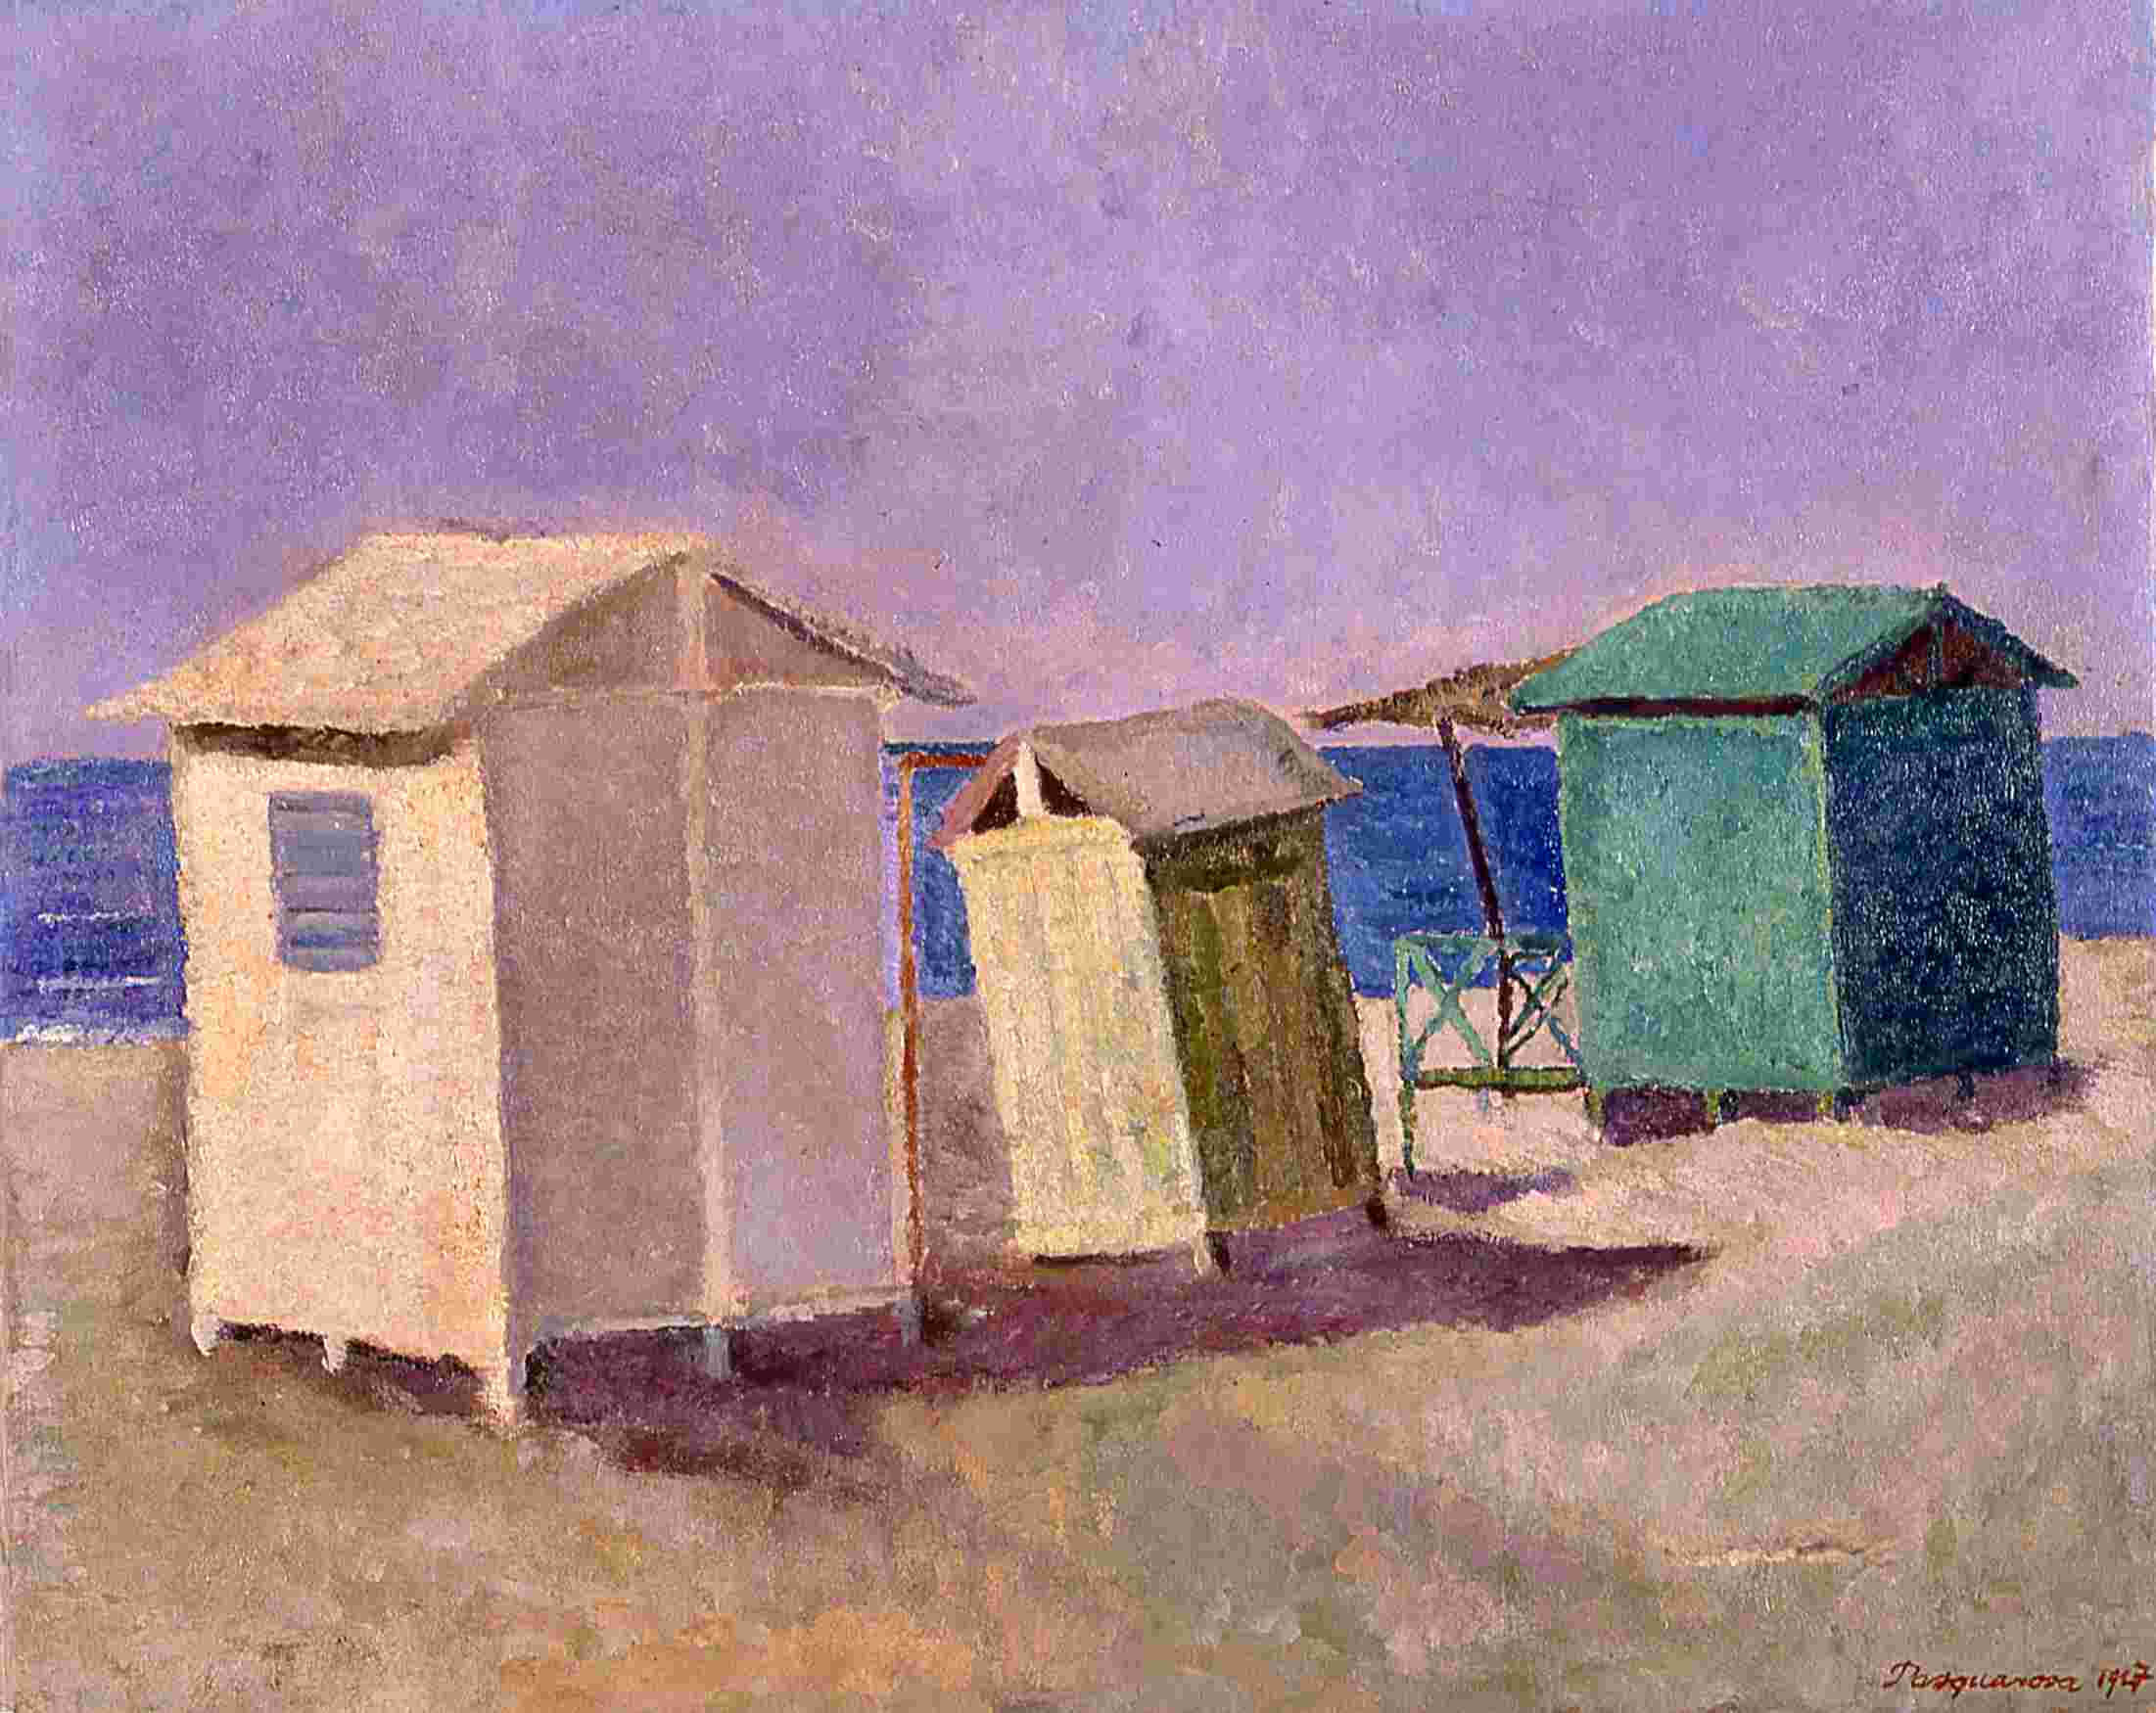 Pasquarosa, Cabine/Capanne sulla spiaggia /Portoferraio, 1927, olio su tela, cm 49x61. Roma, Galleria d'Arte Moderna